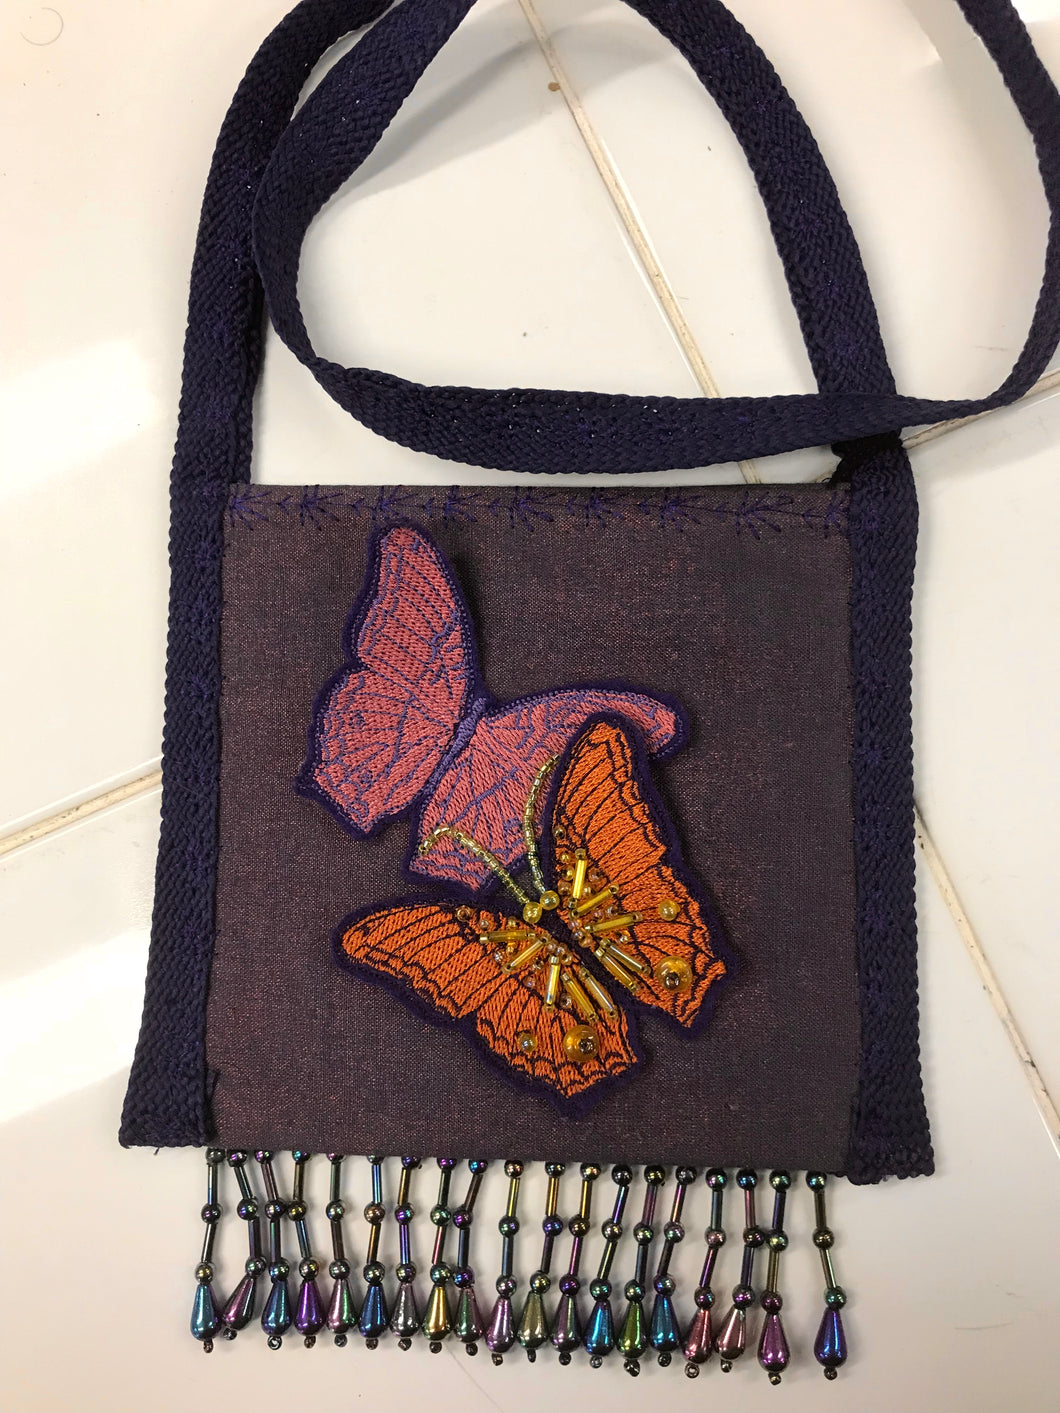 Butterfly Bag: Two Butterflies